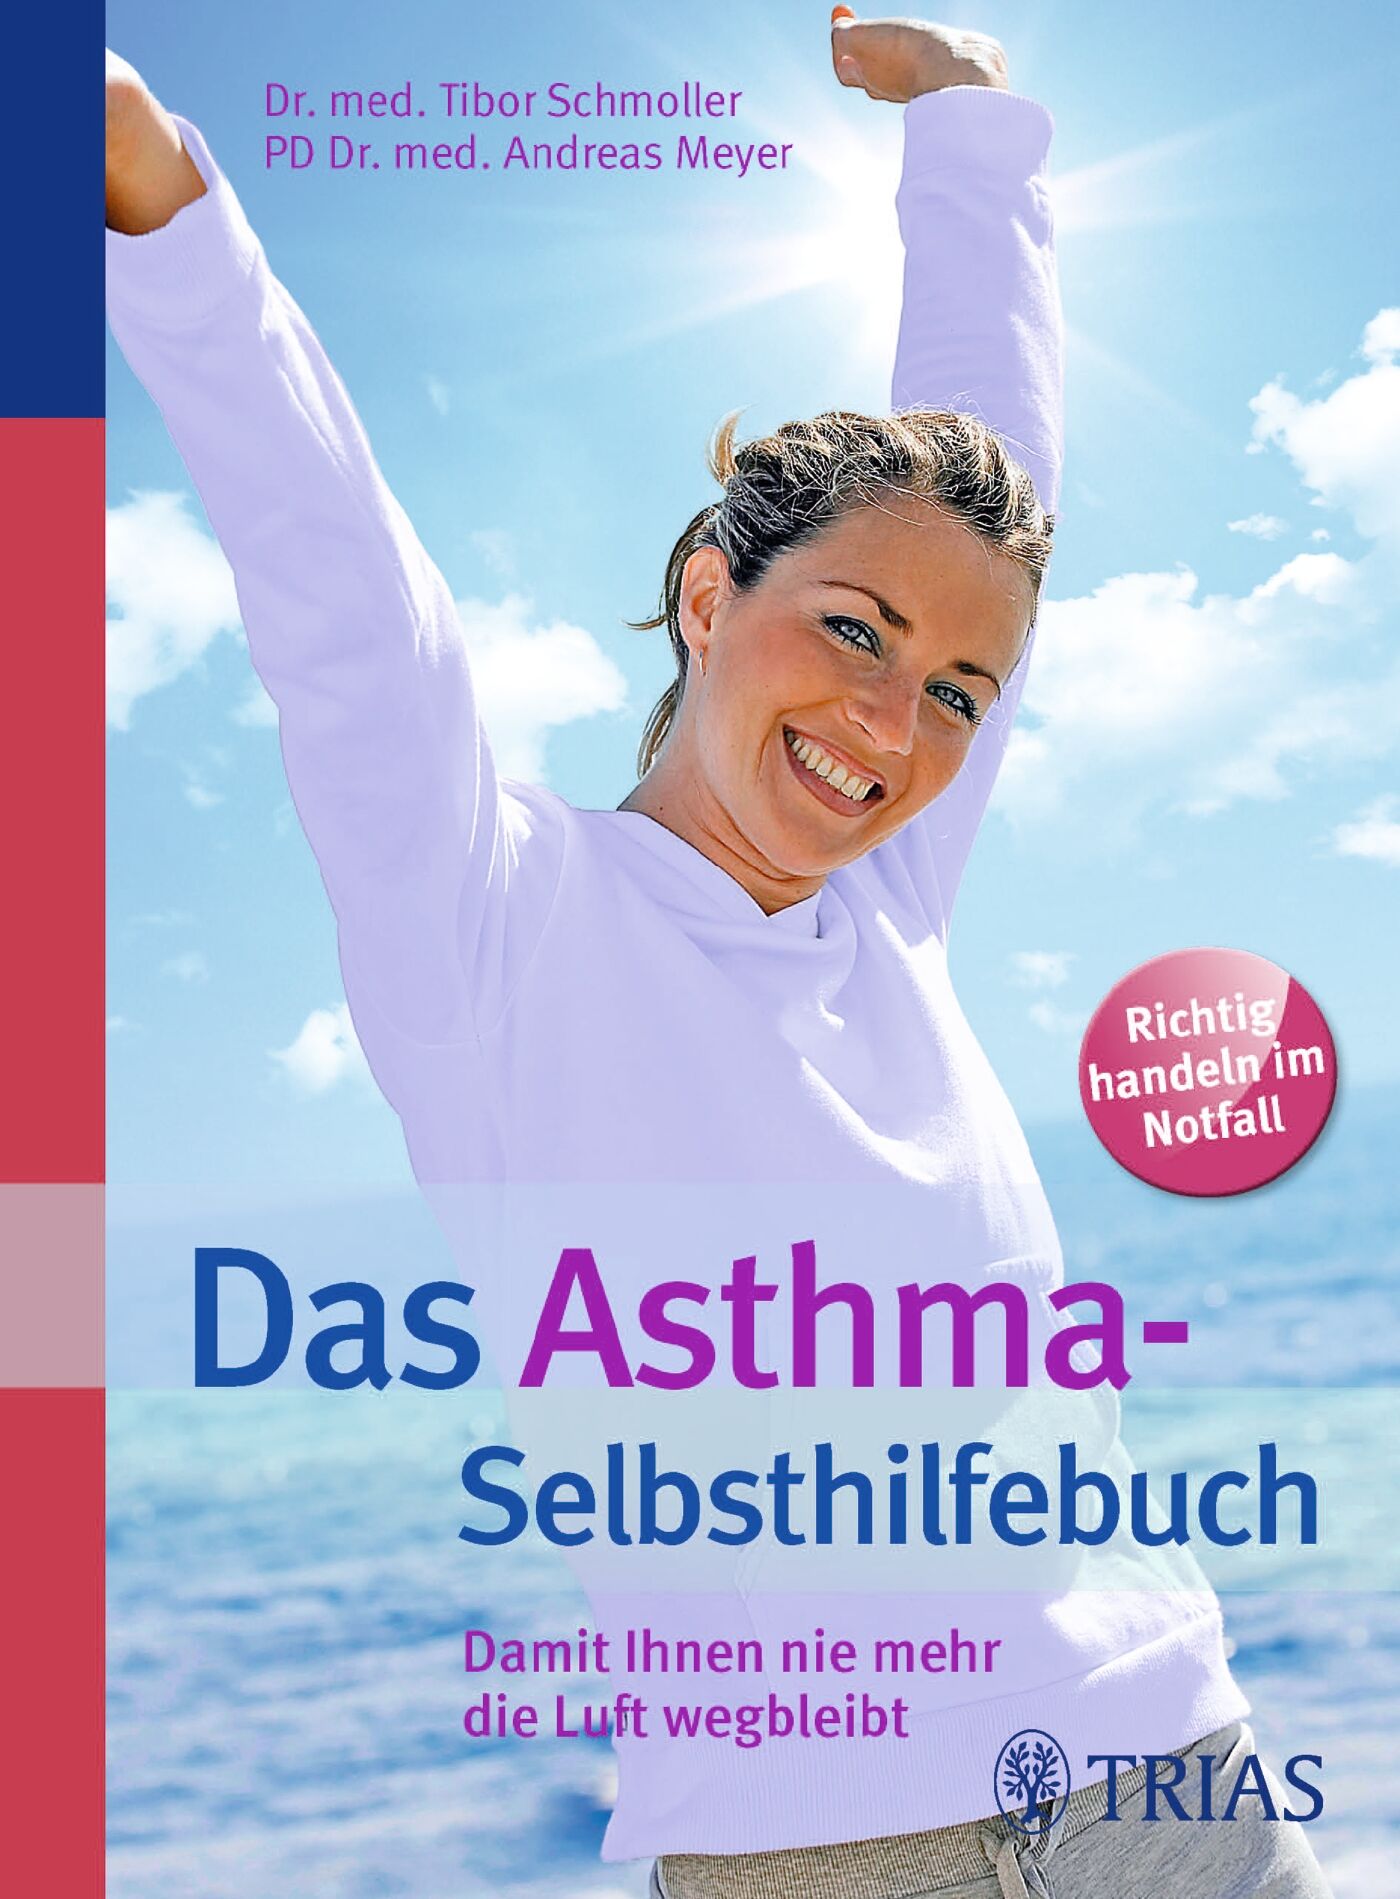 Das Asthma-Selbsthilfebuch, 9783830466499